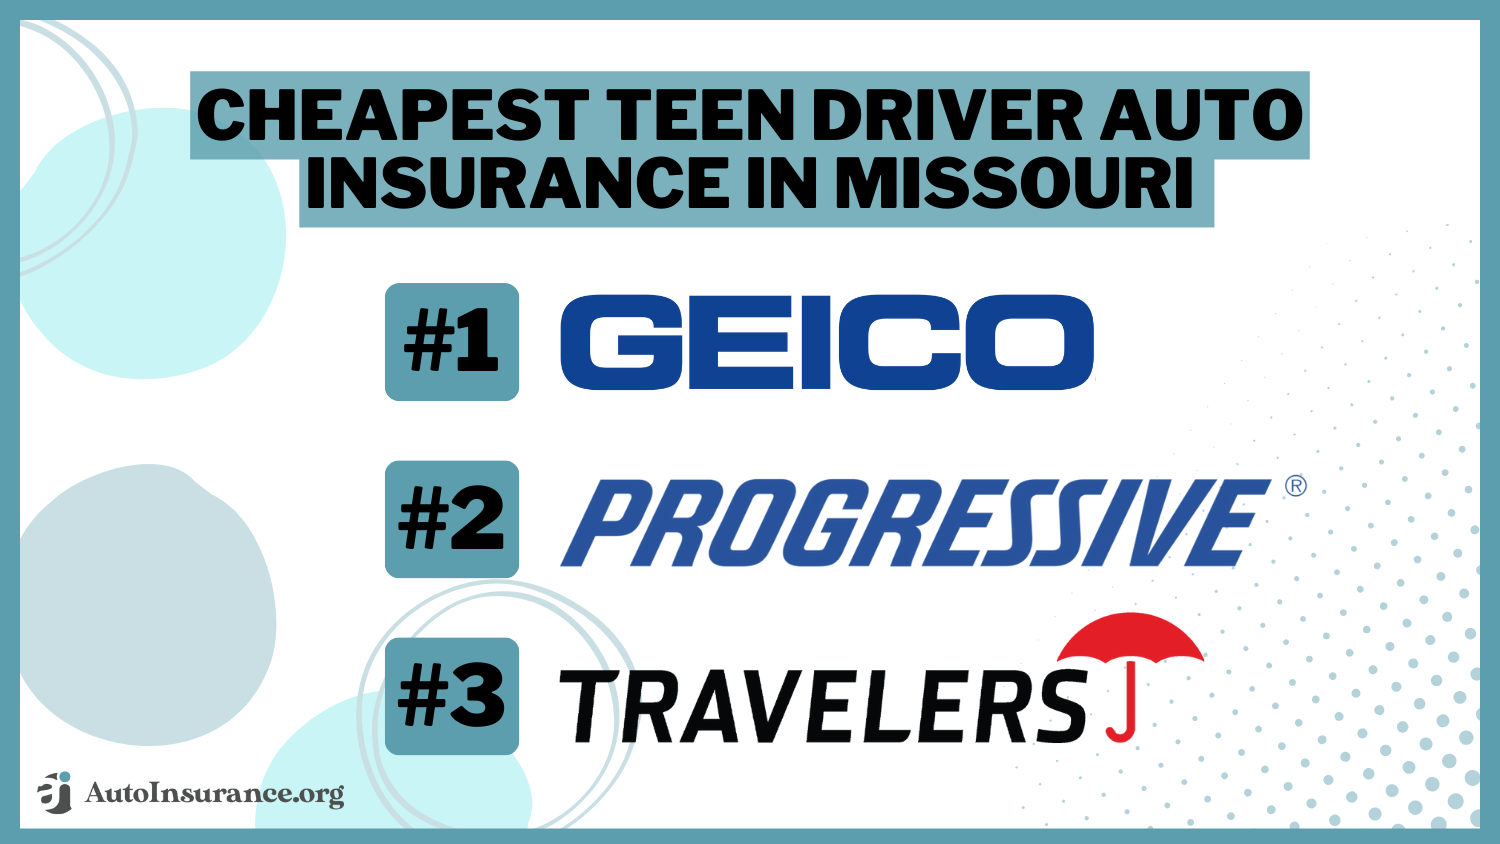 Cheapest Teen Driver Auto Insurance in Missouri: Geico, Progressive, Travelers